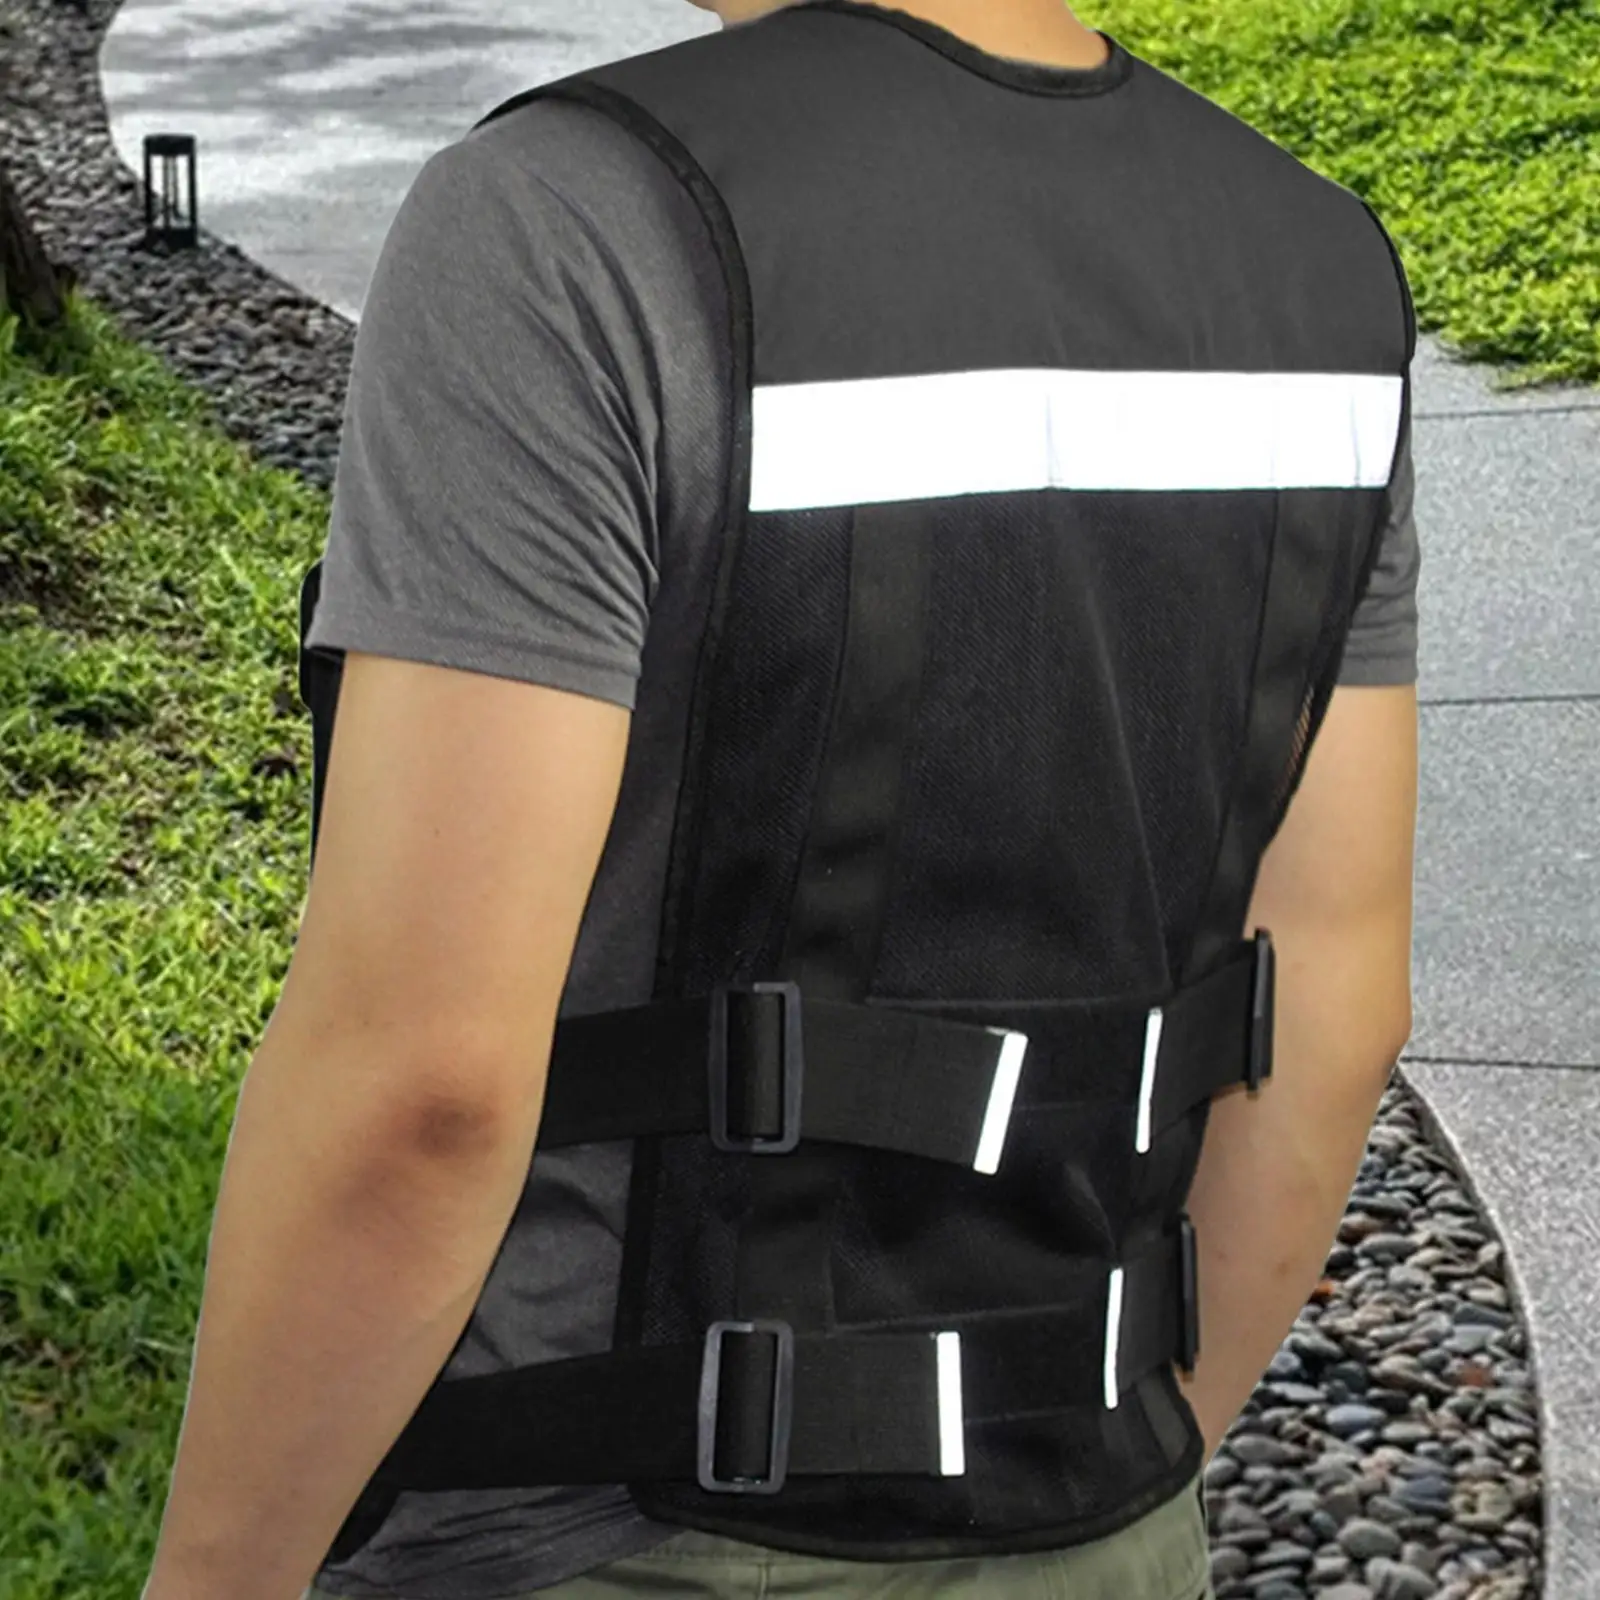 Safety Vest with Reflective Strips Zipper Front Construction Vest